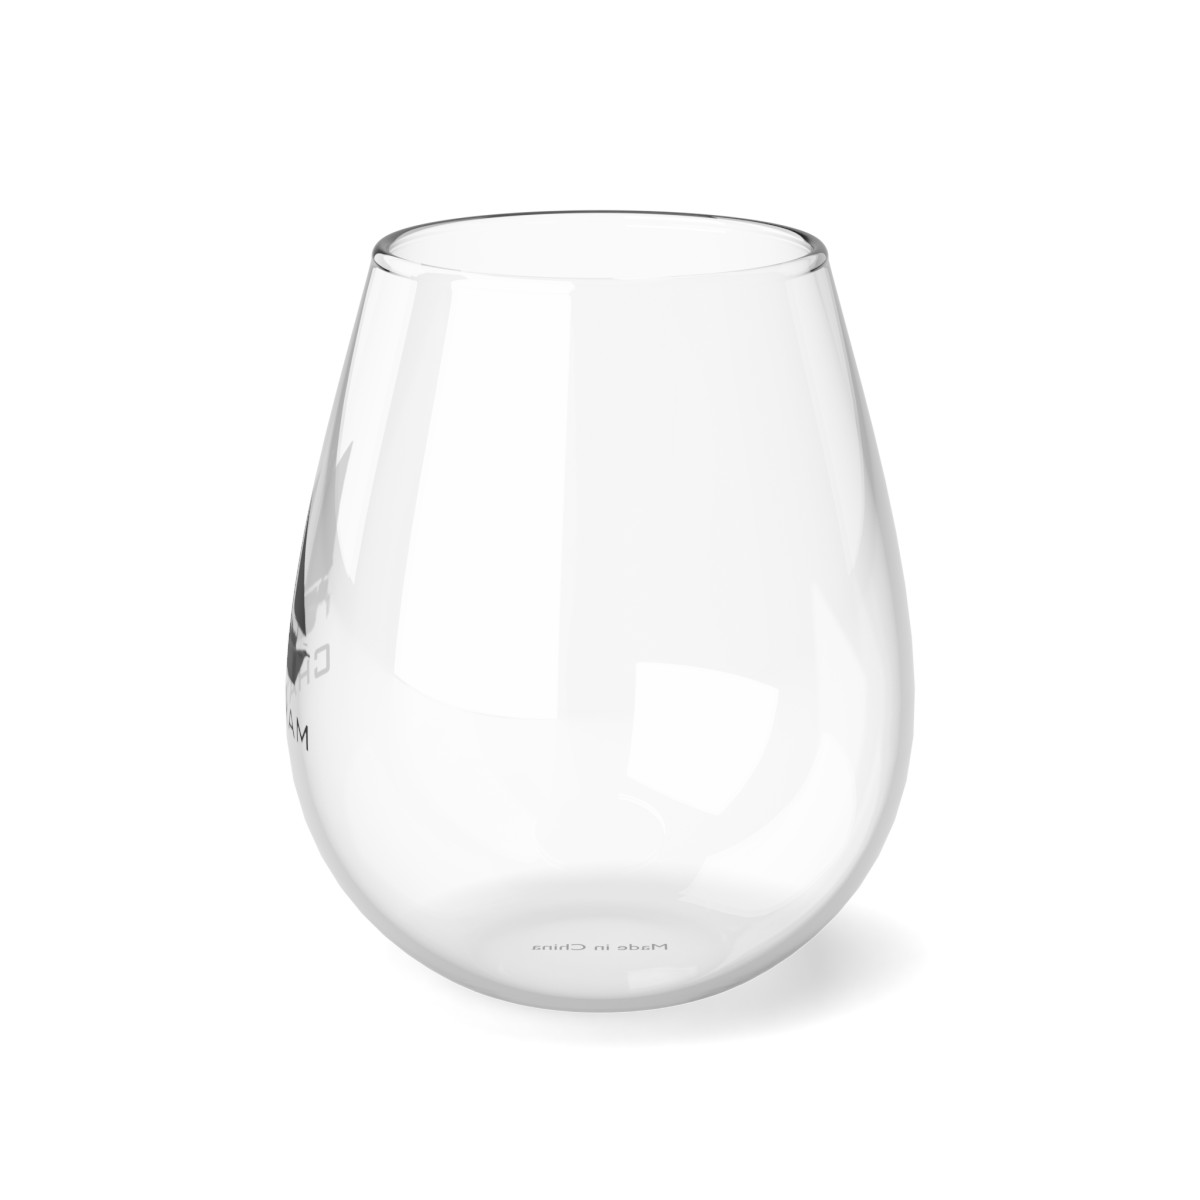 Dark Sails Chatham Stemless Wine Glass, 11.75oz product thumbnail image